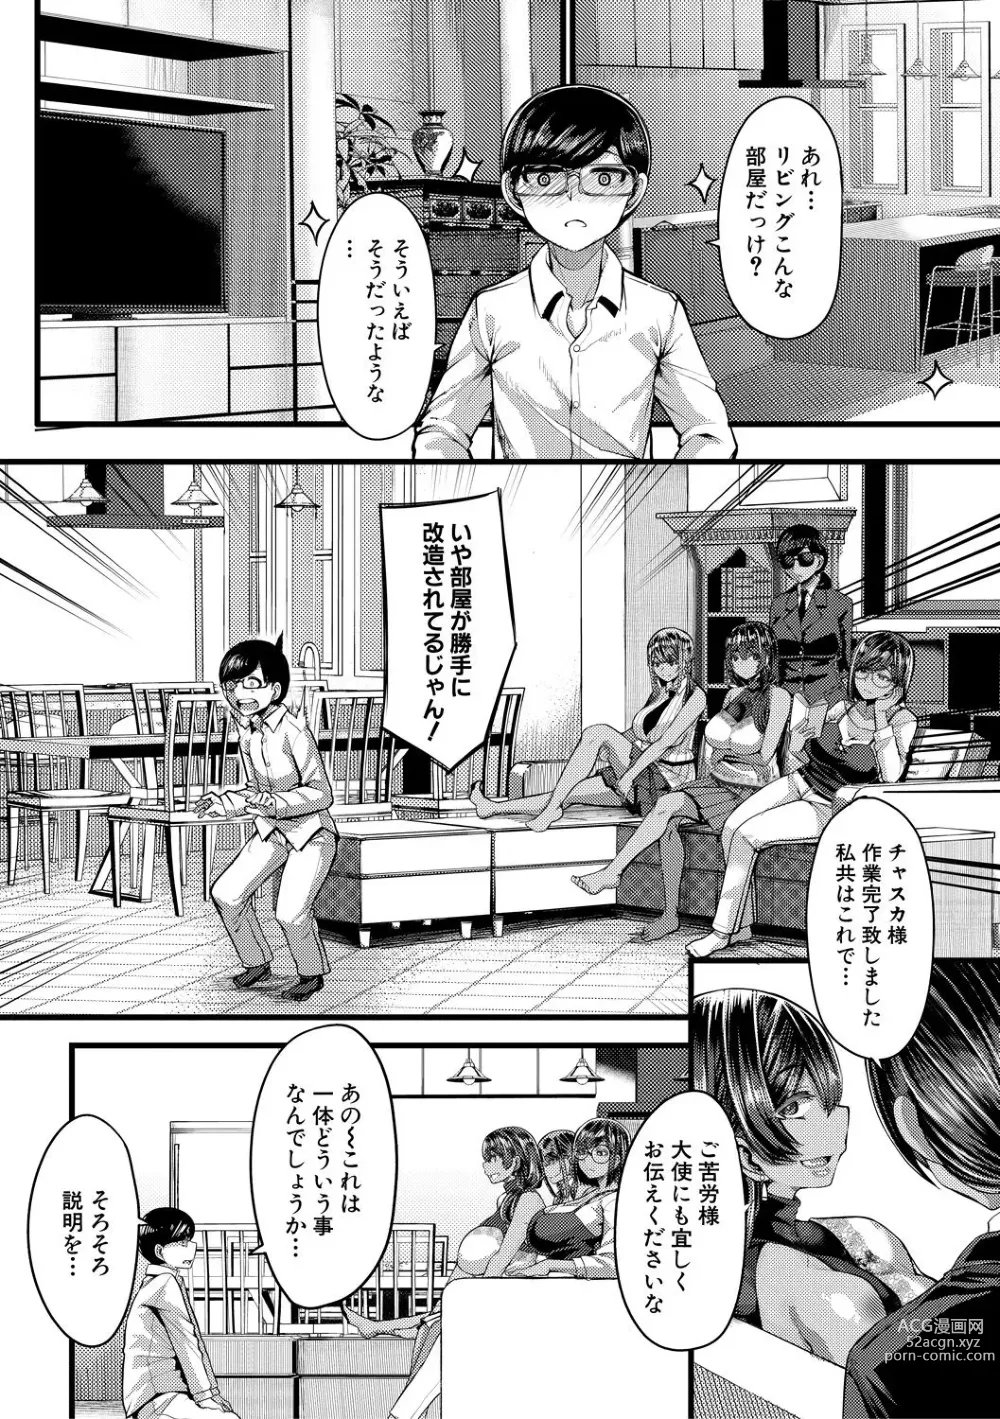 Page 6 of manga Kasshoku Hime to Himitsu no Keiyaku